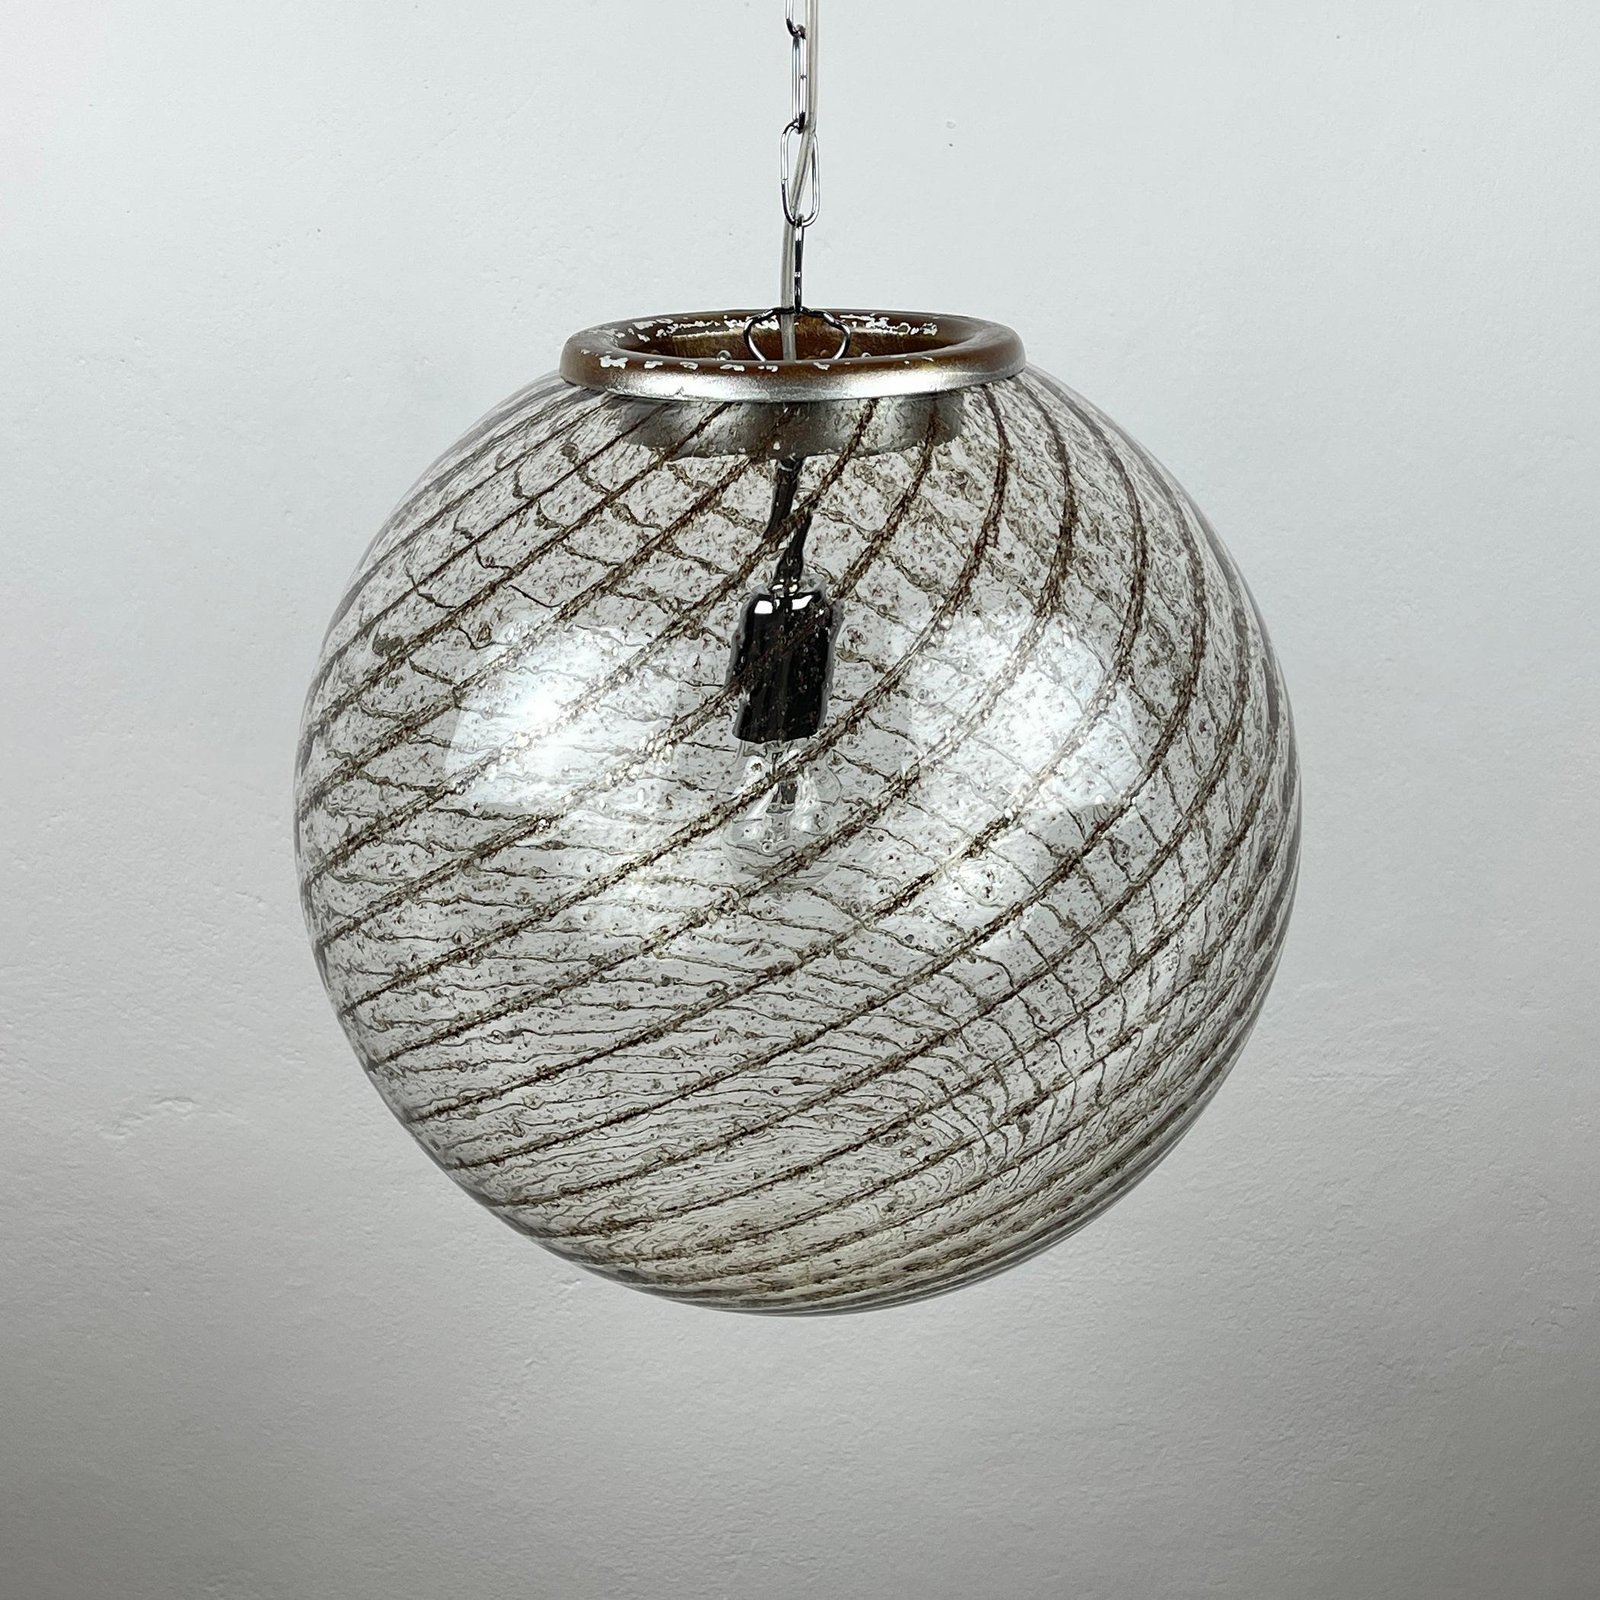 Vintage XL swirled murano glass pendant lamp La Murrina Italy 1970s Mid-century modern italian lighting